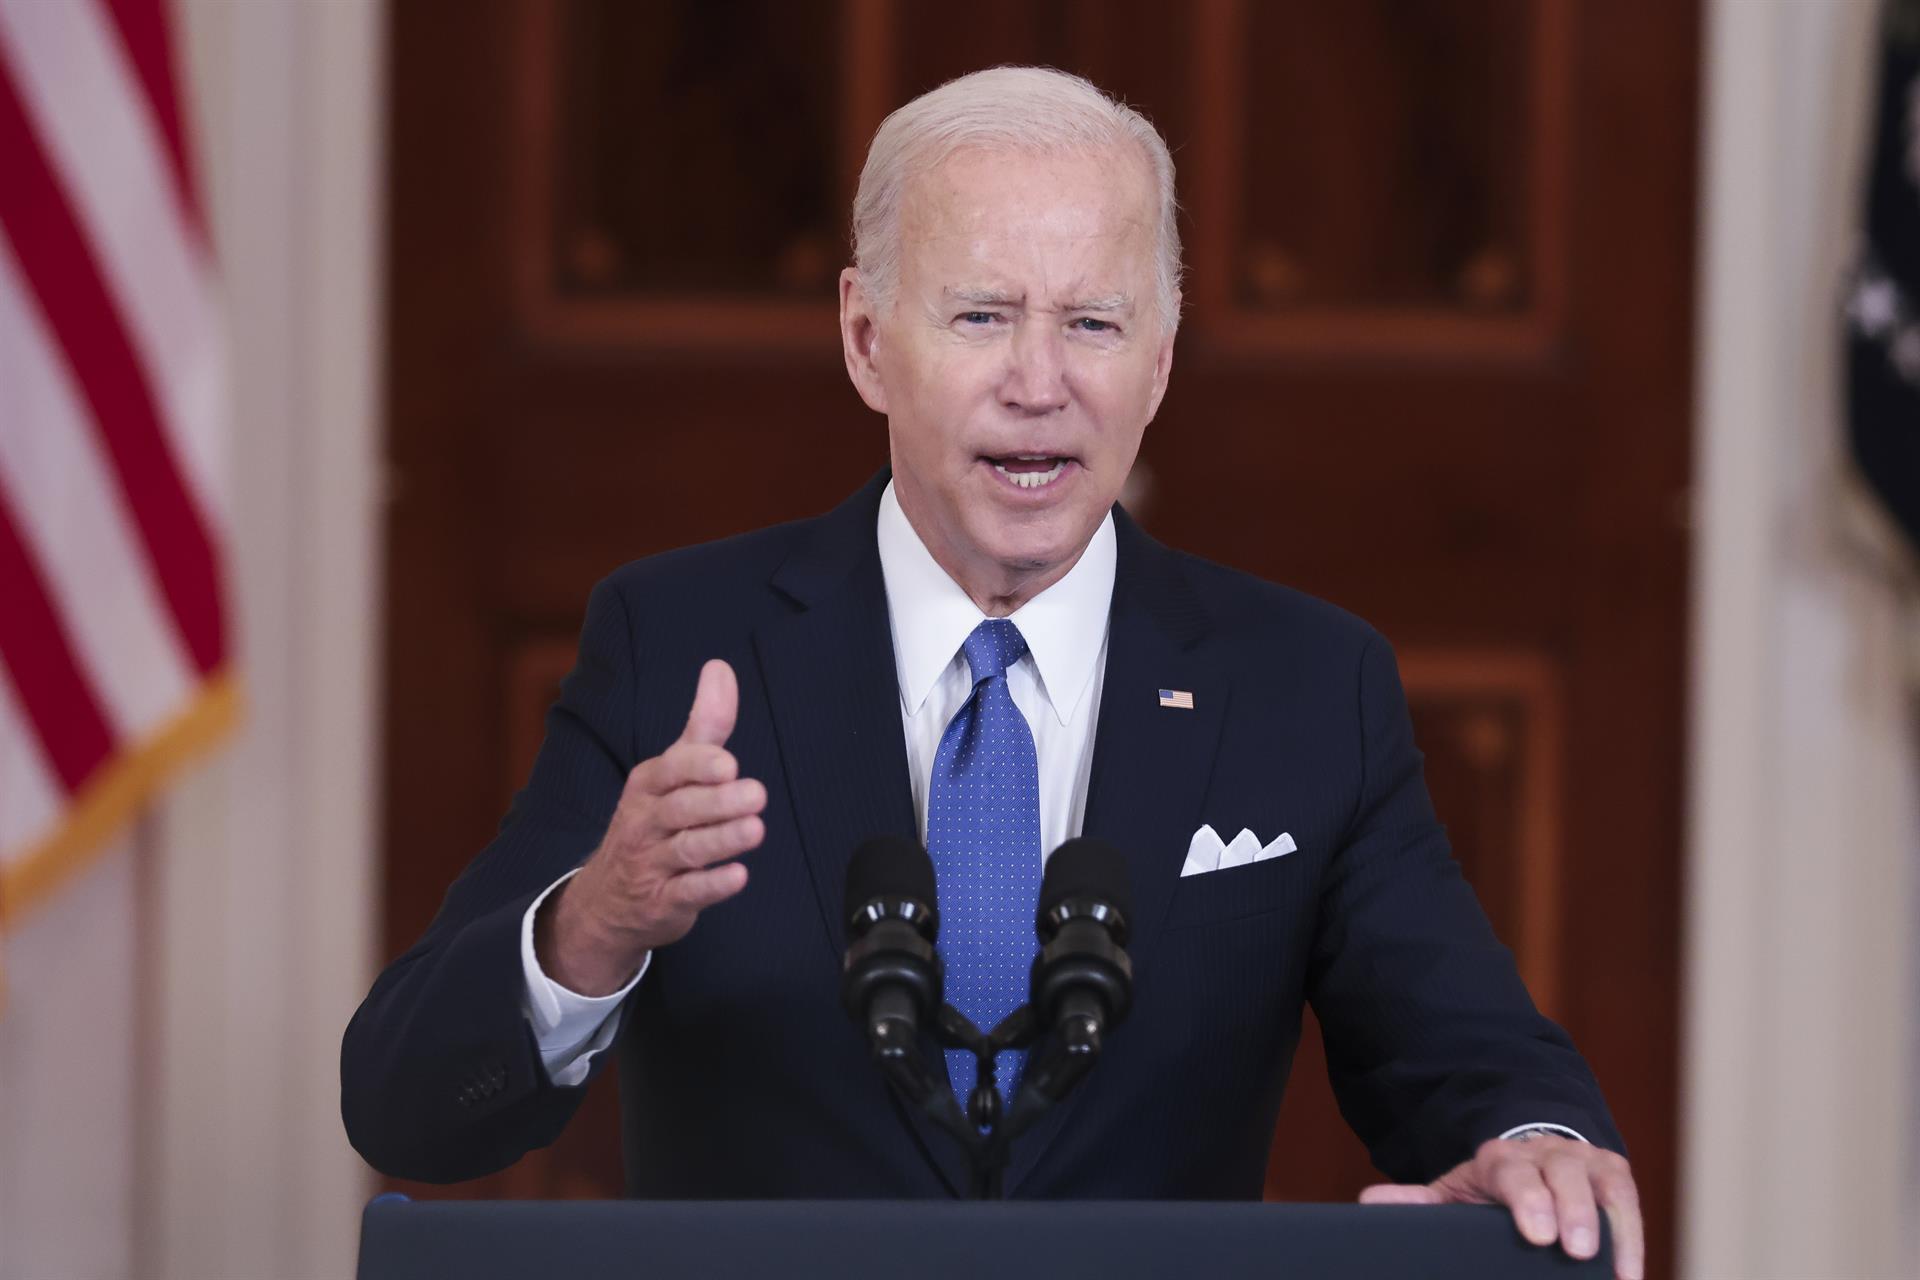 Biden promulga la primera ley sobre control de armas en EEUU